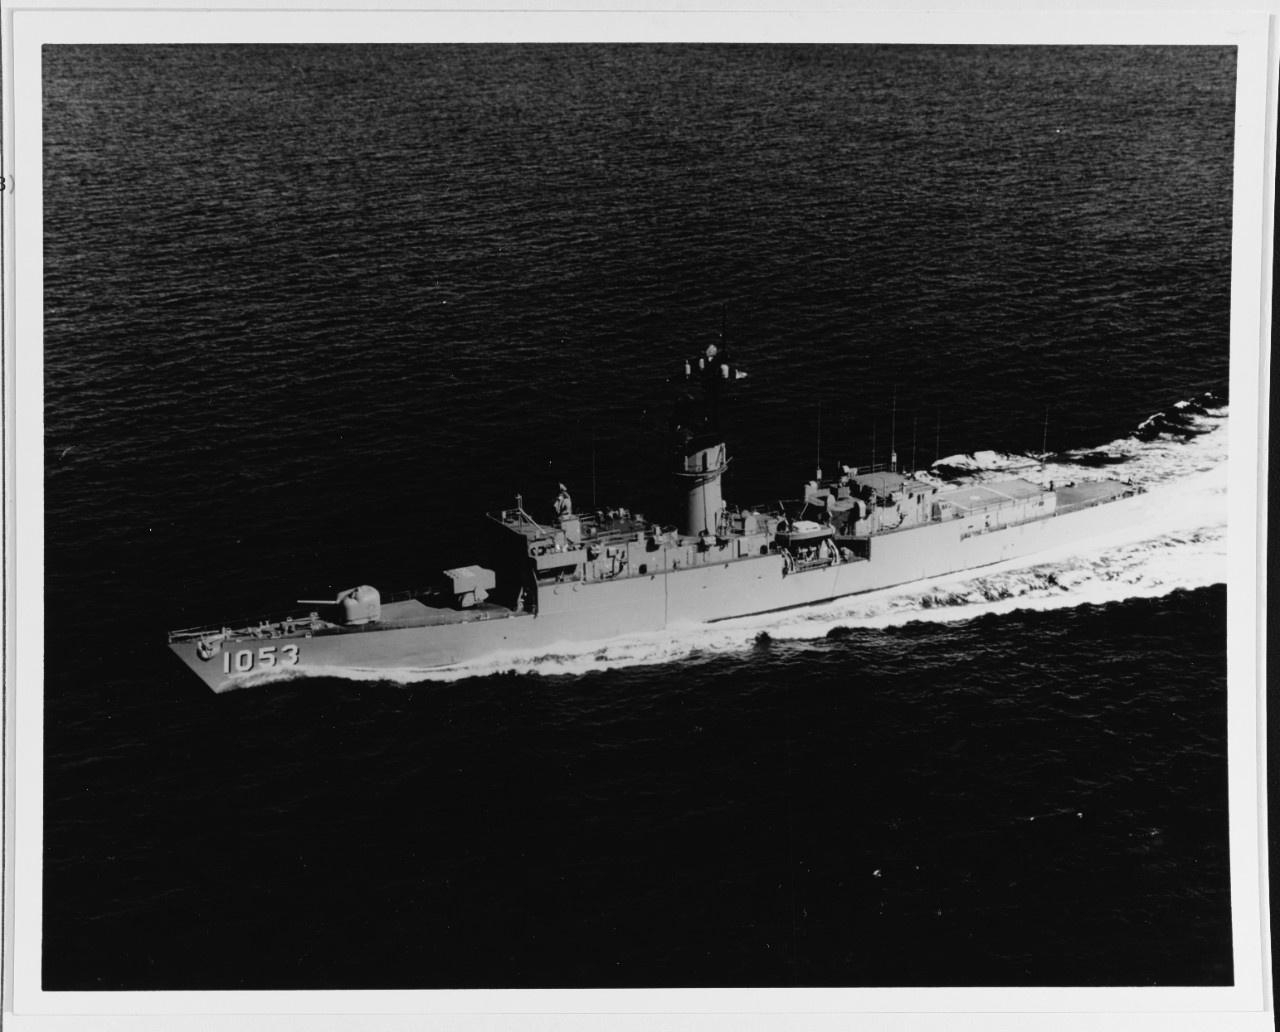 USS ROARK (DE-1053)